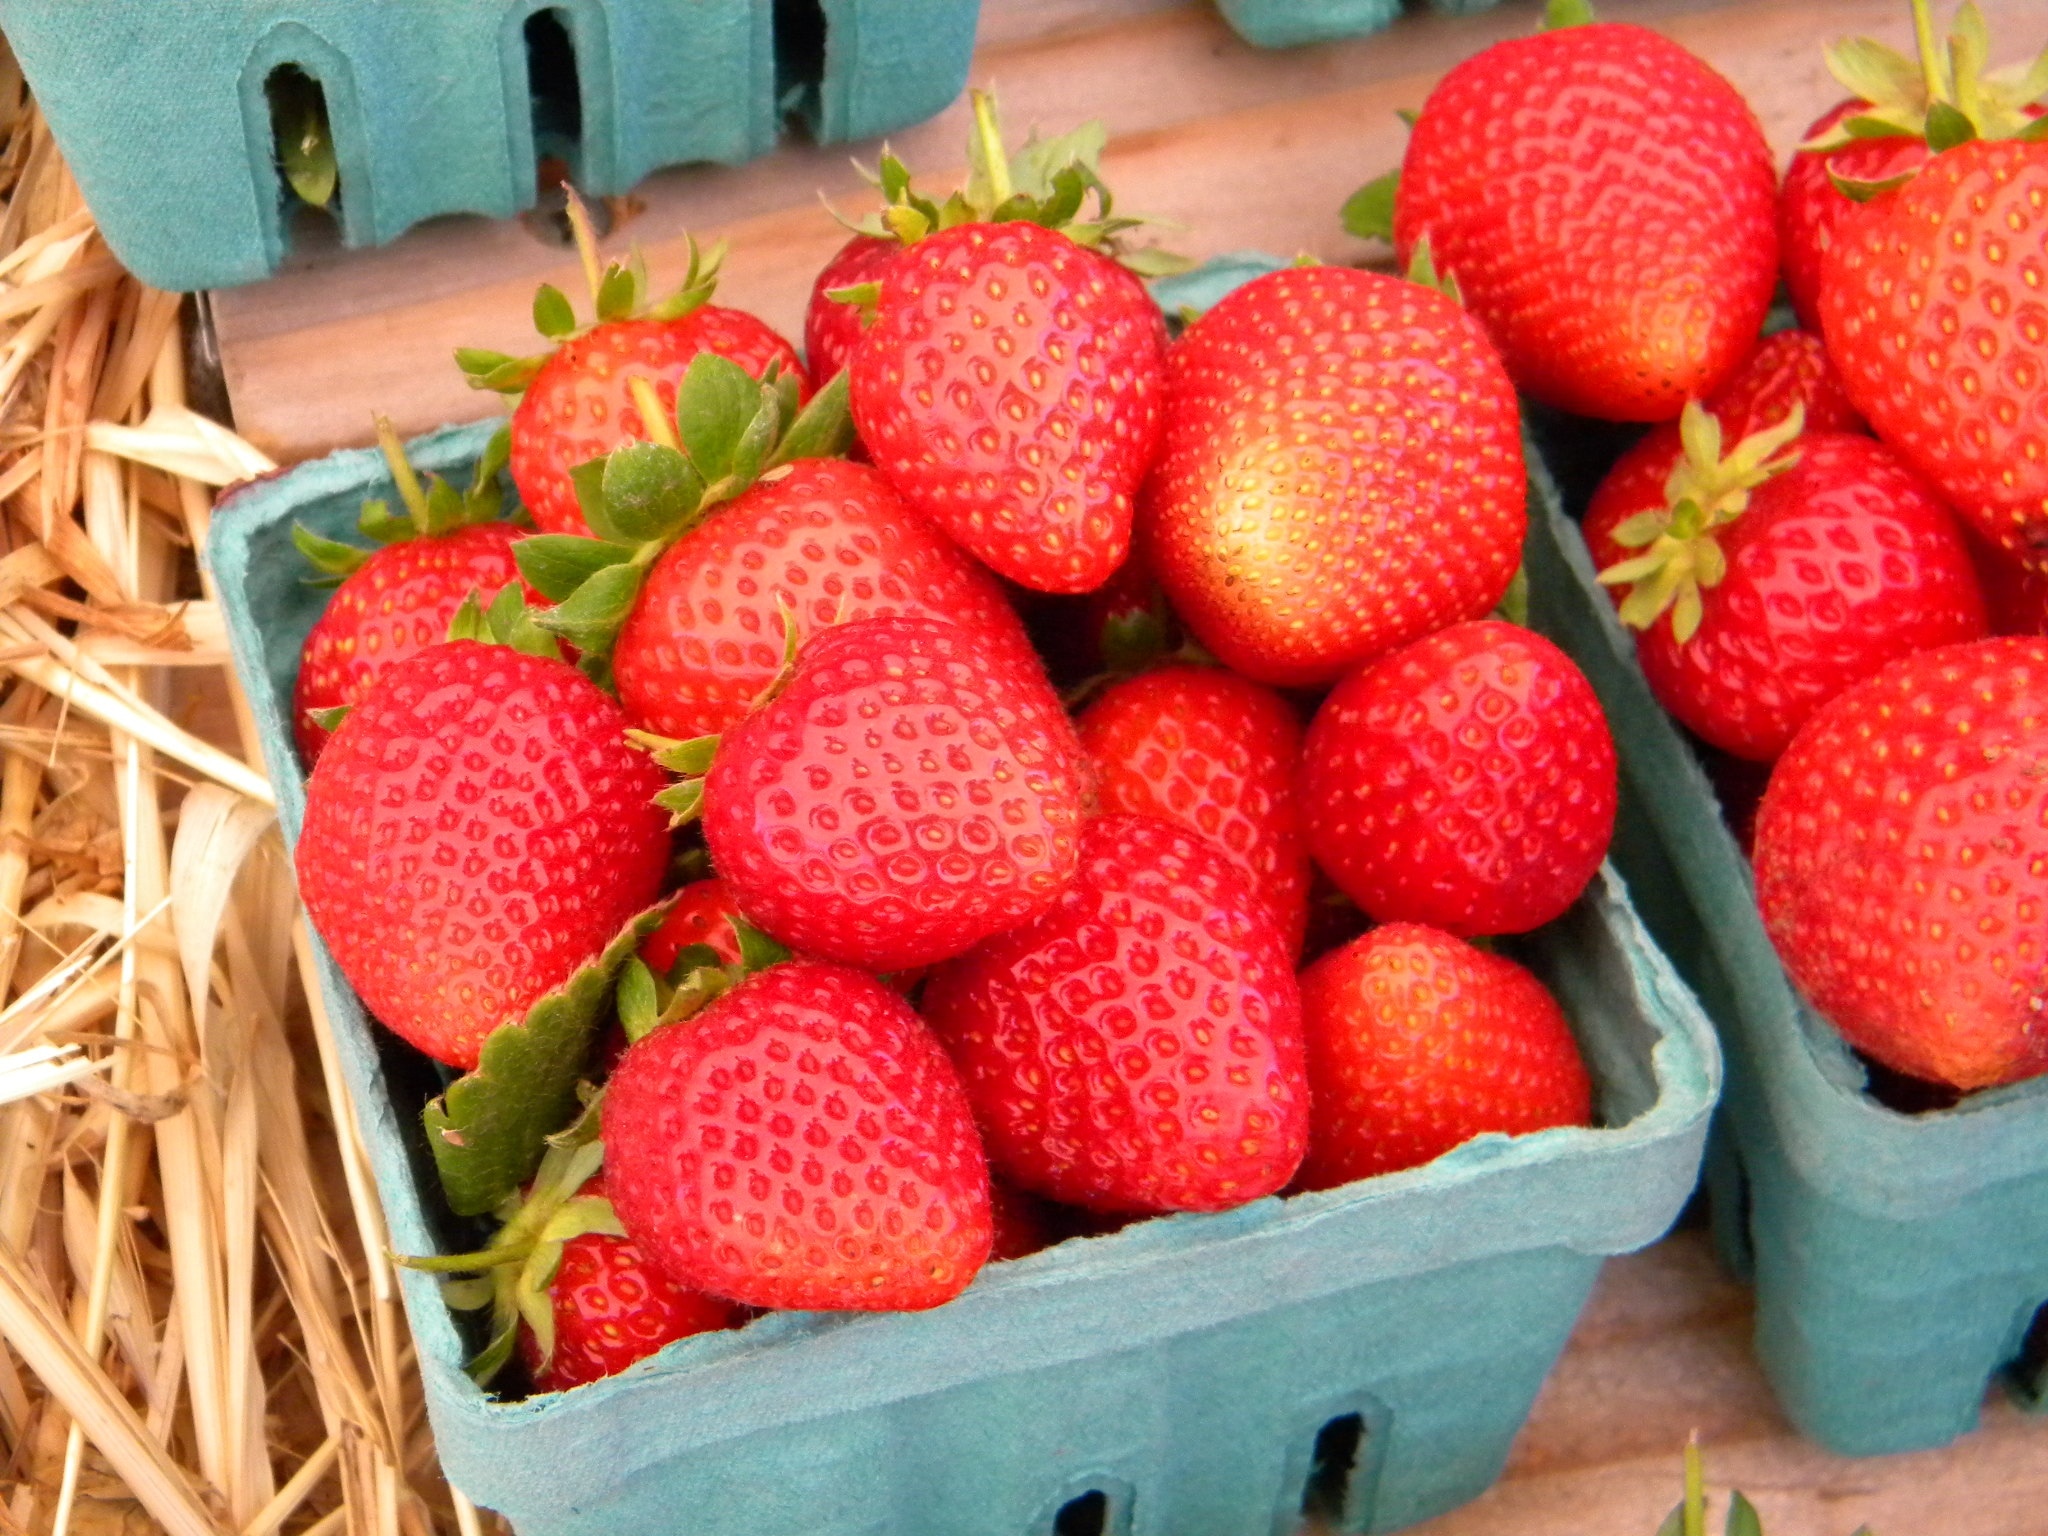 strawberries on gray plastic basket